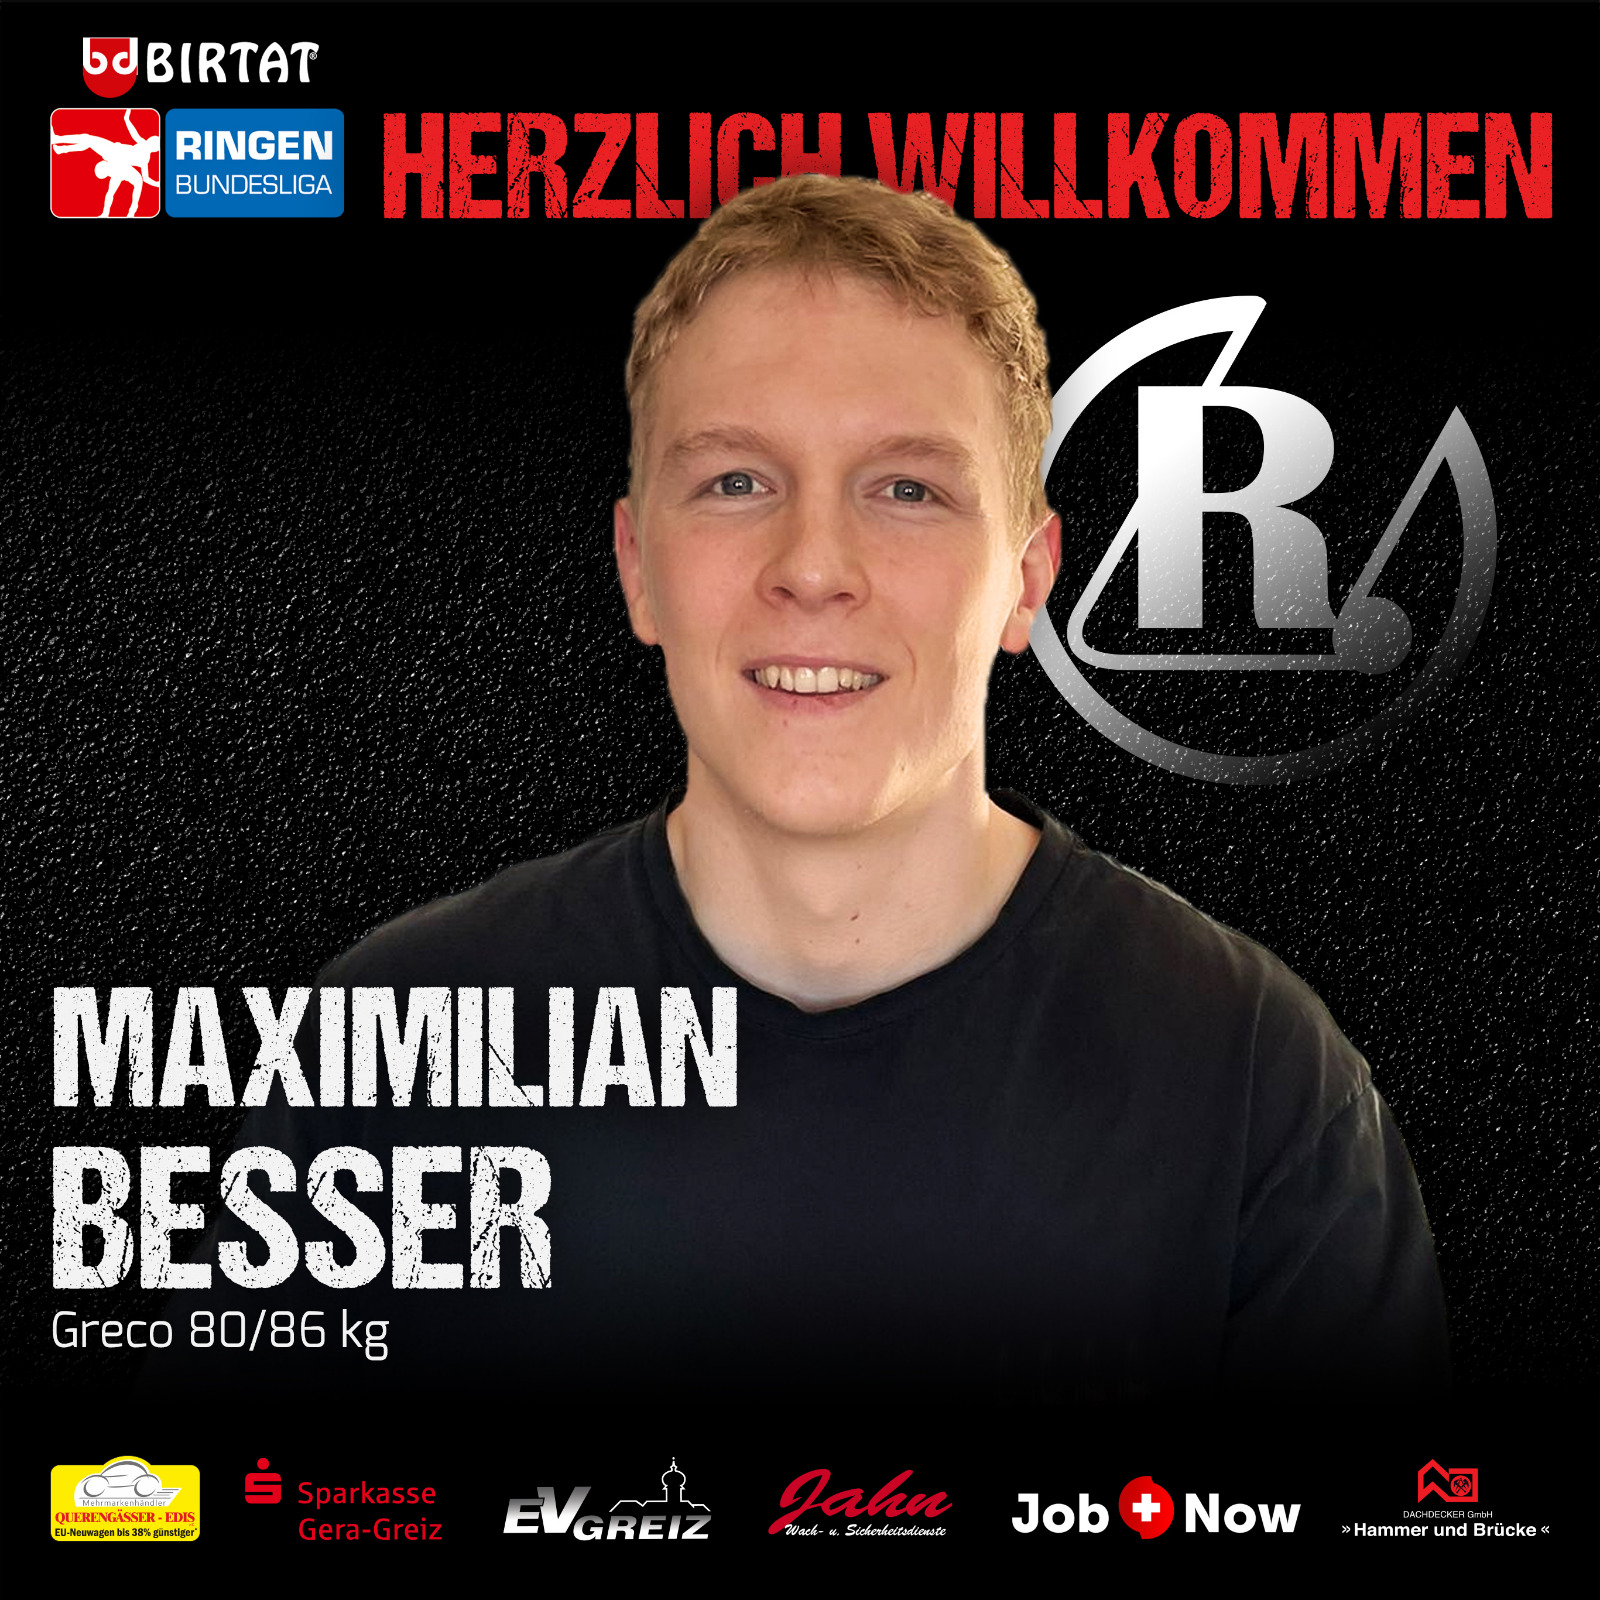 Maximilian Besser